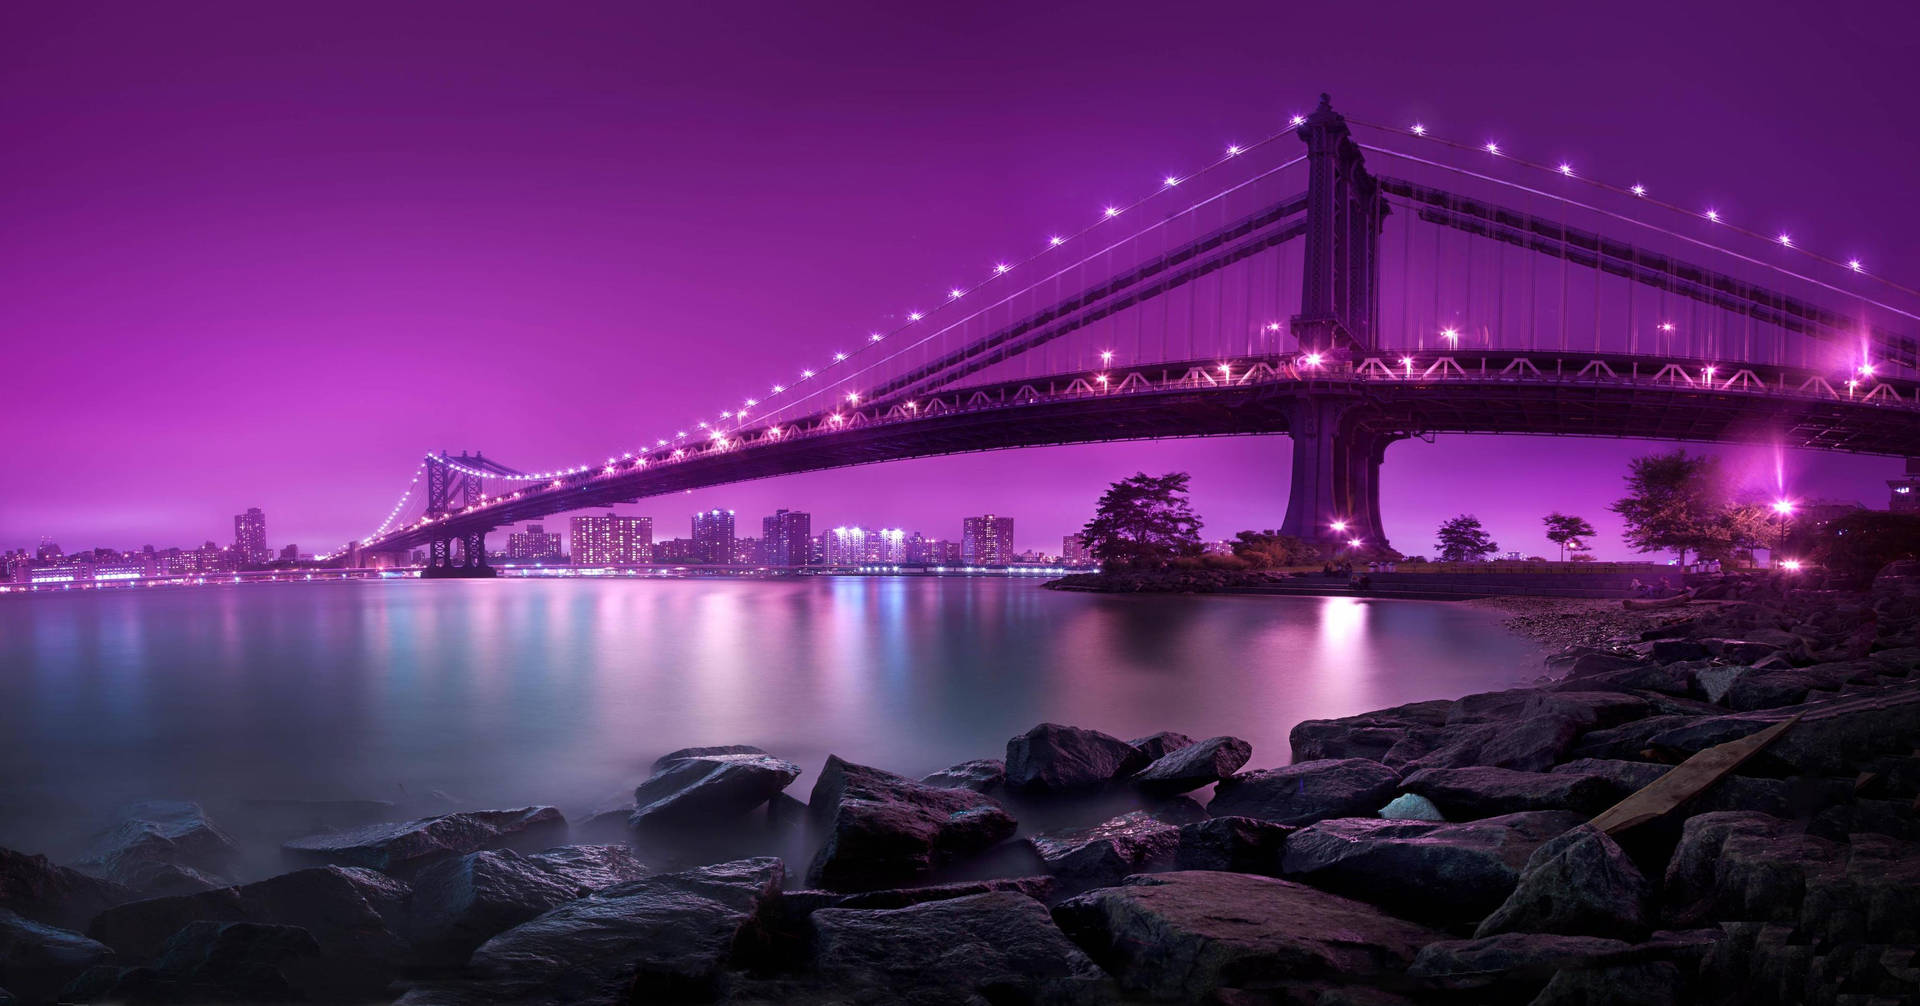 Attractive Purple Bridge At Night Wallpaper